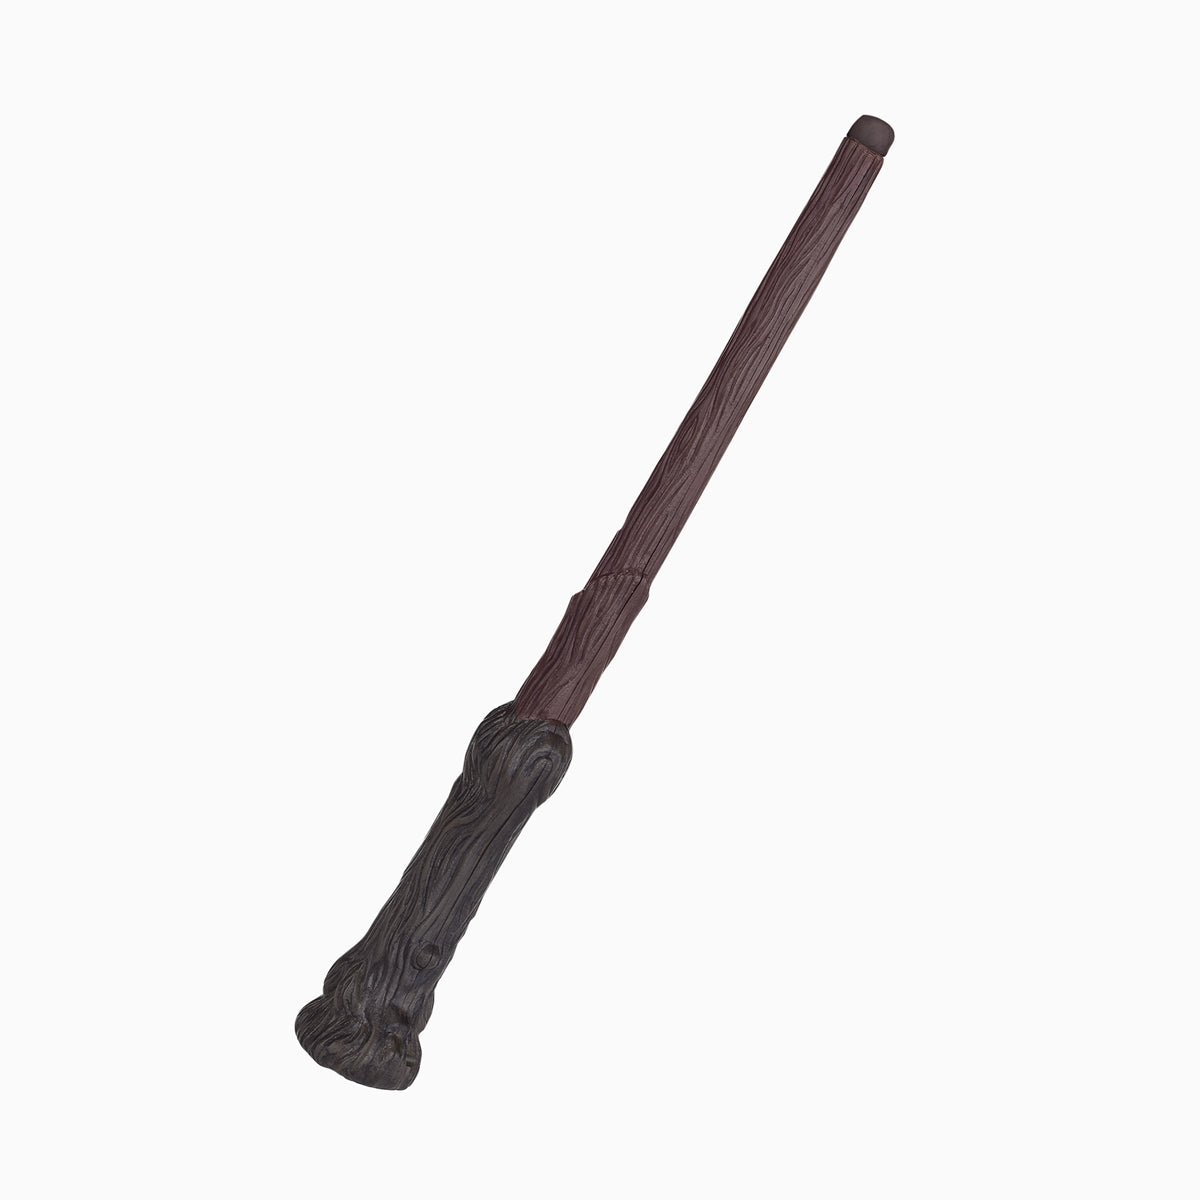 Harry Potter magic wand